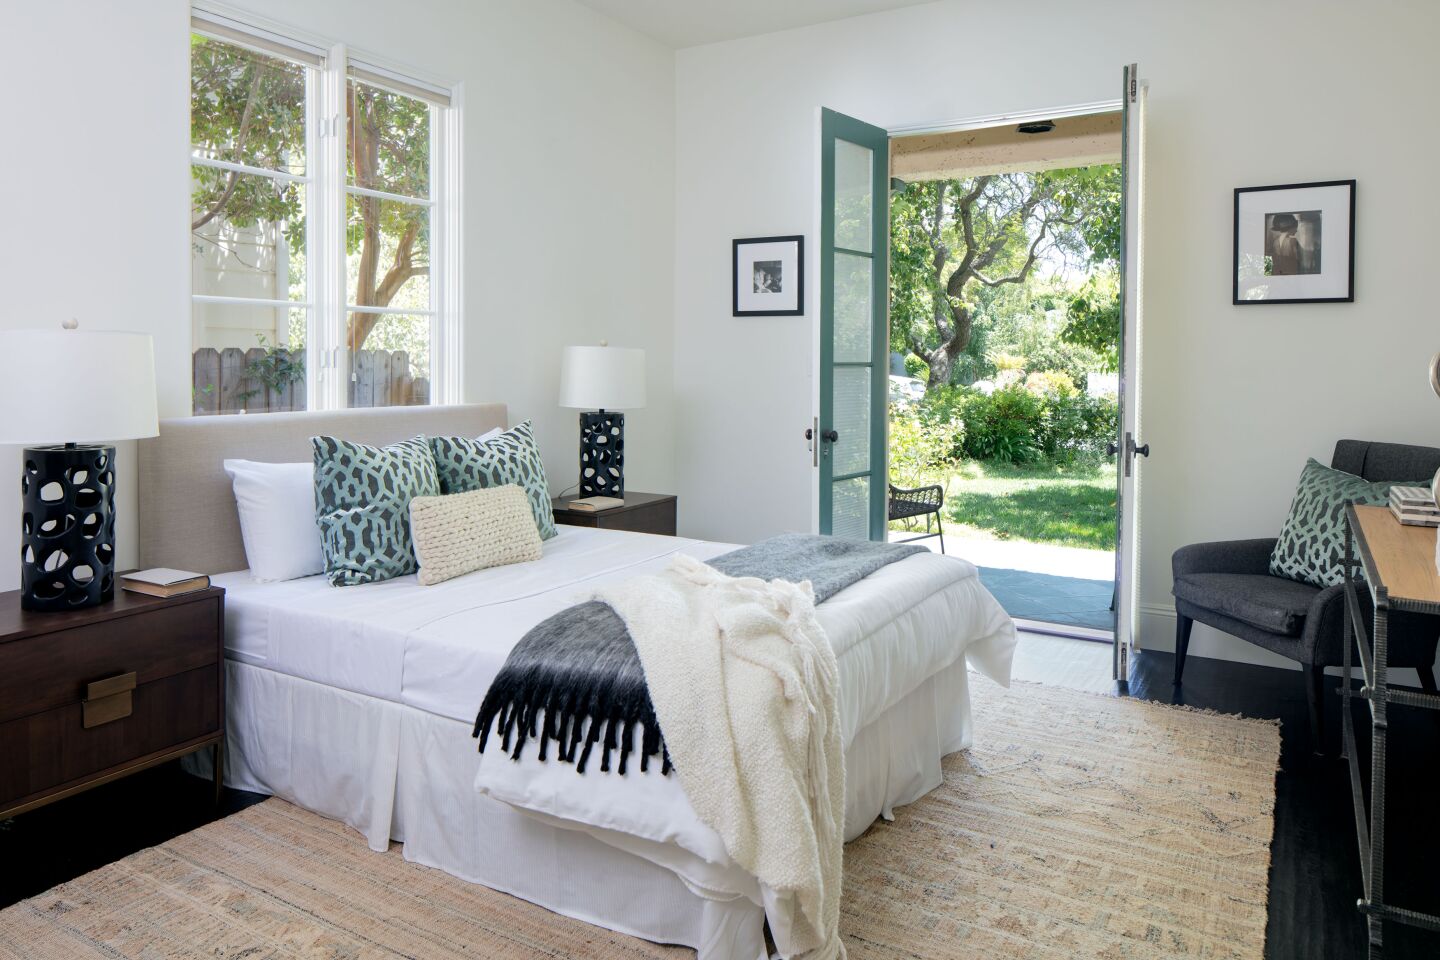 Geena Davis' Pacific Palisades house: a bedroom